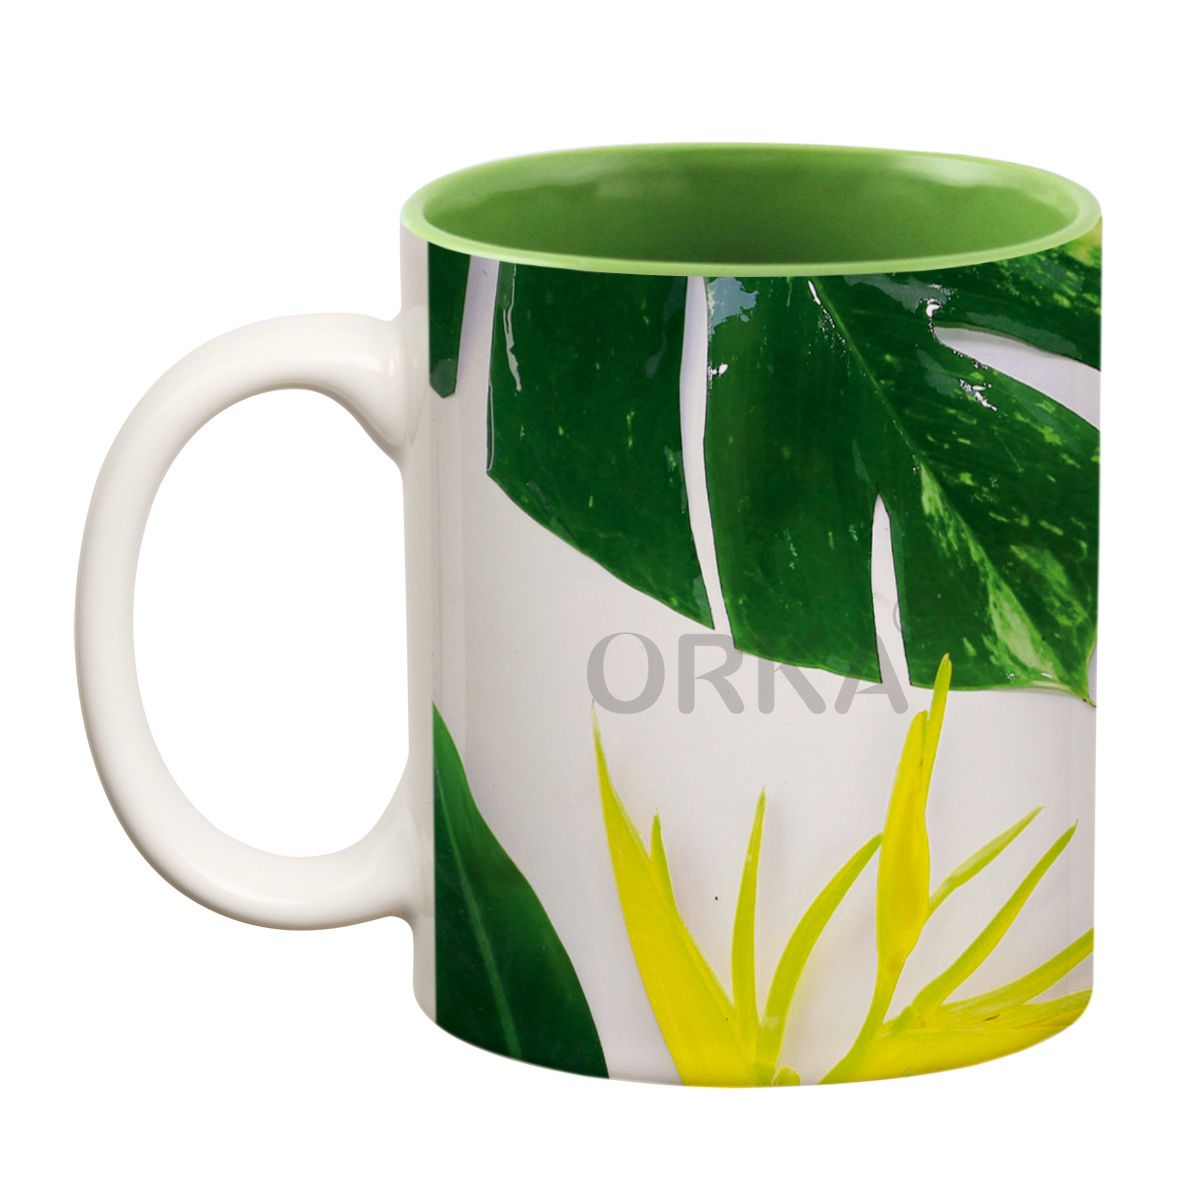 ORKA Coffee Mug Nature Printed. 11 Oz   